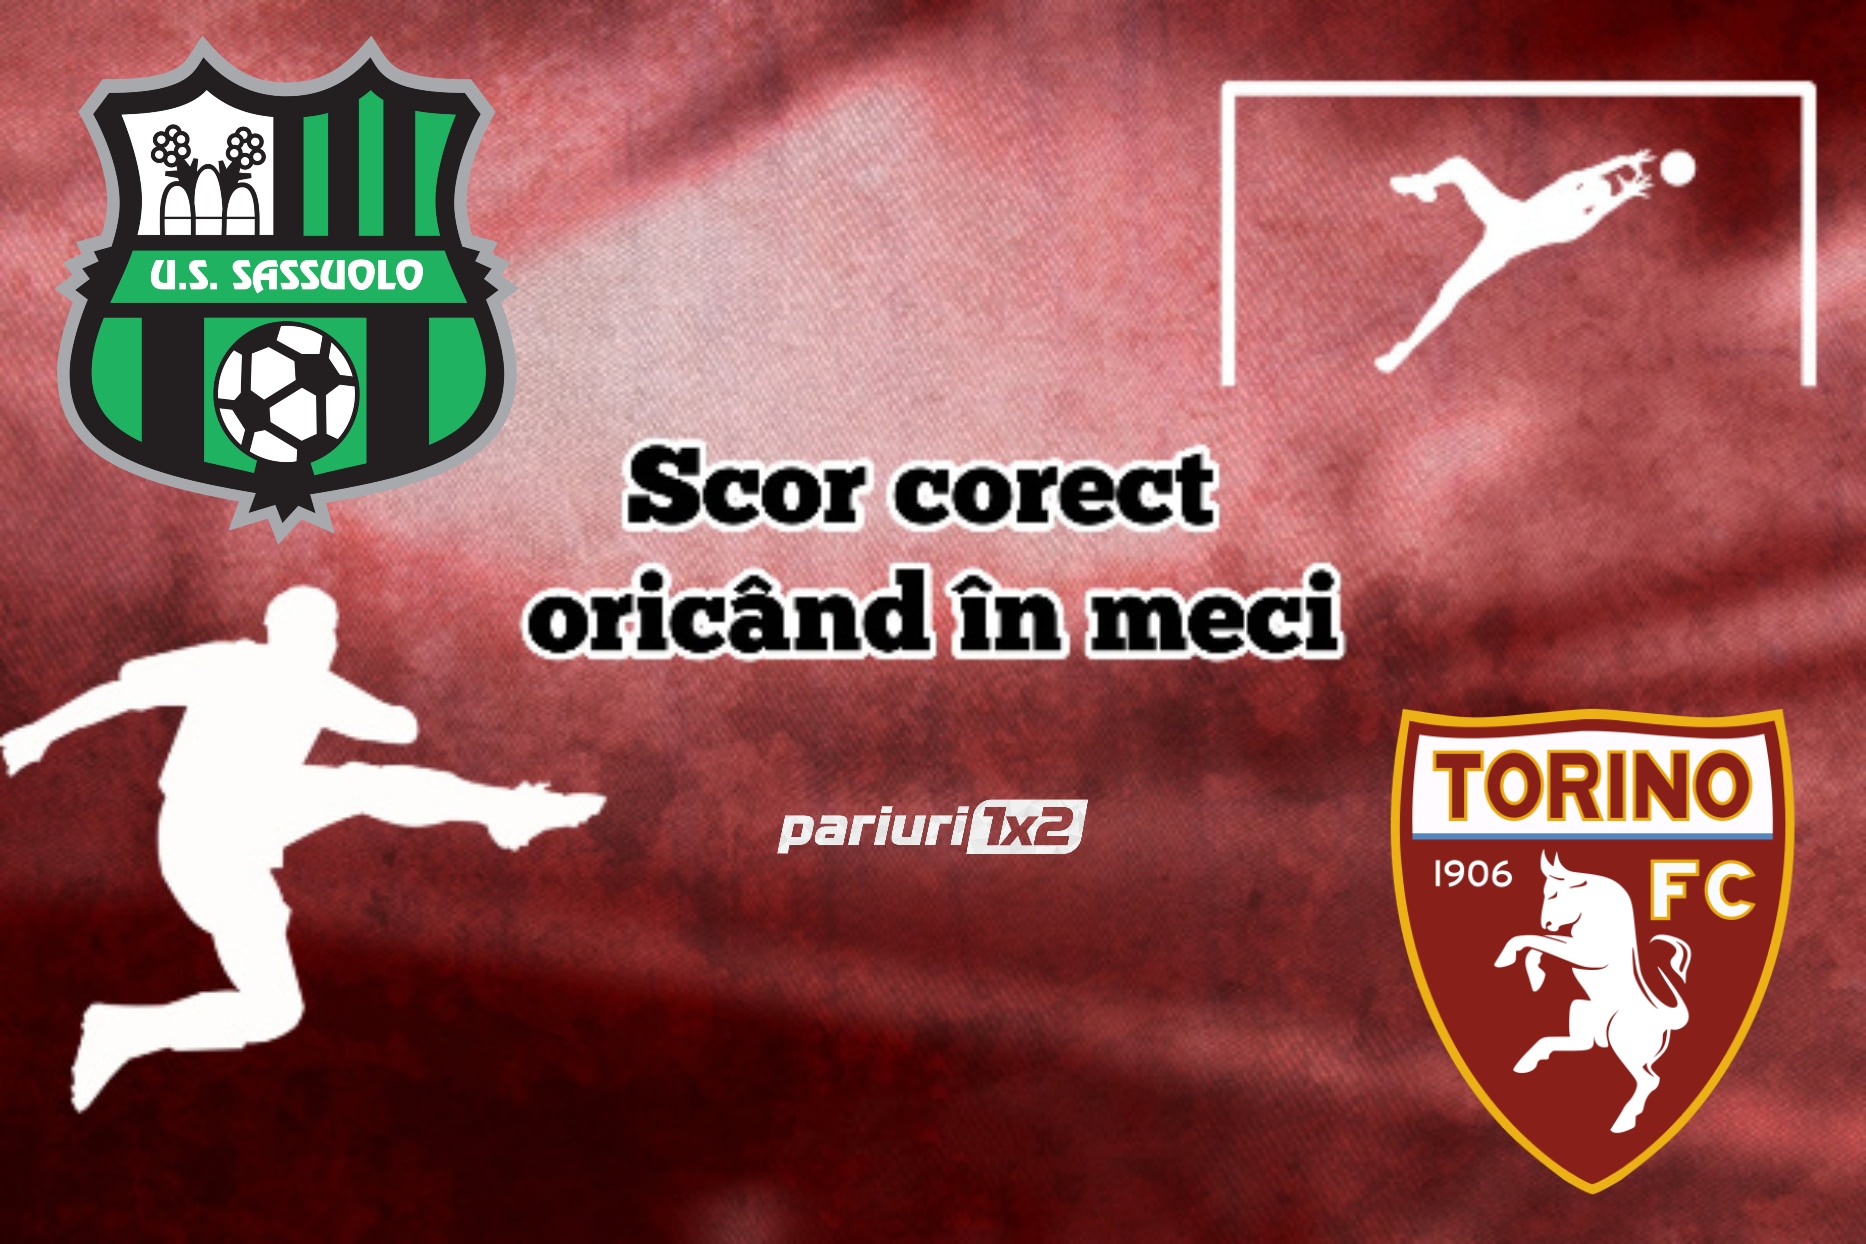 Ponturi fotbal » Sassuolo – Torino: Optiunea „scor corect oricand in meci” are cota 2.15! Vezi cum alegem sa pariem!